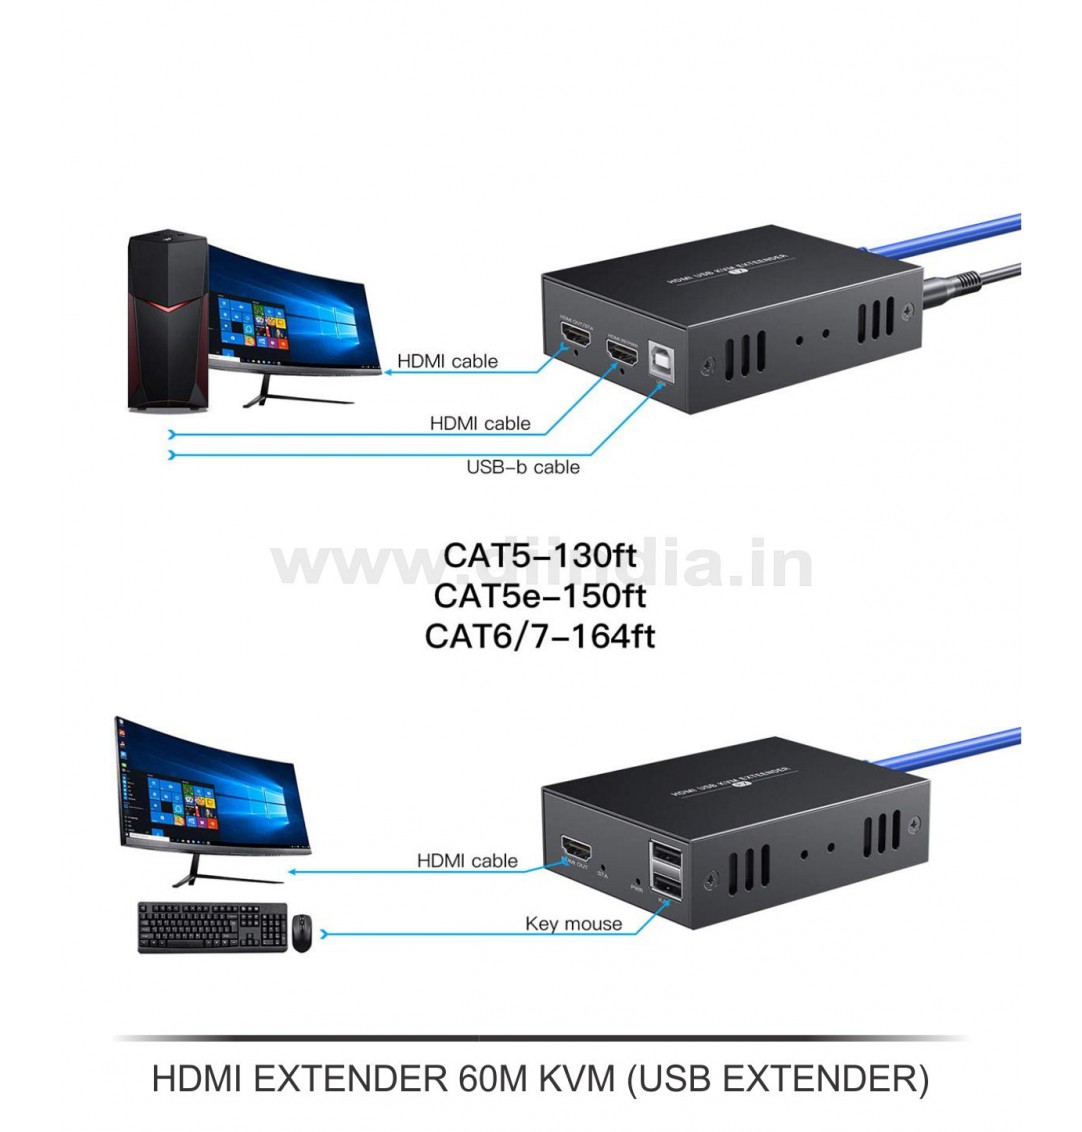 HDMI EXTENDER 60M KVM (USB EXTENDER)